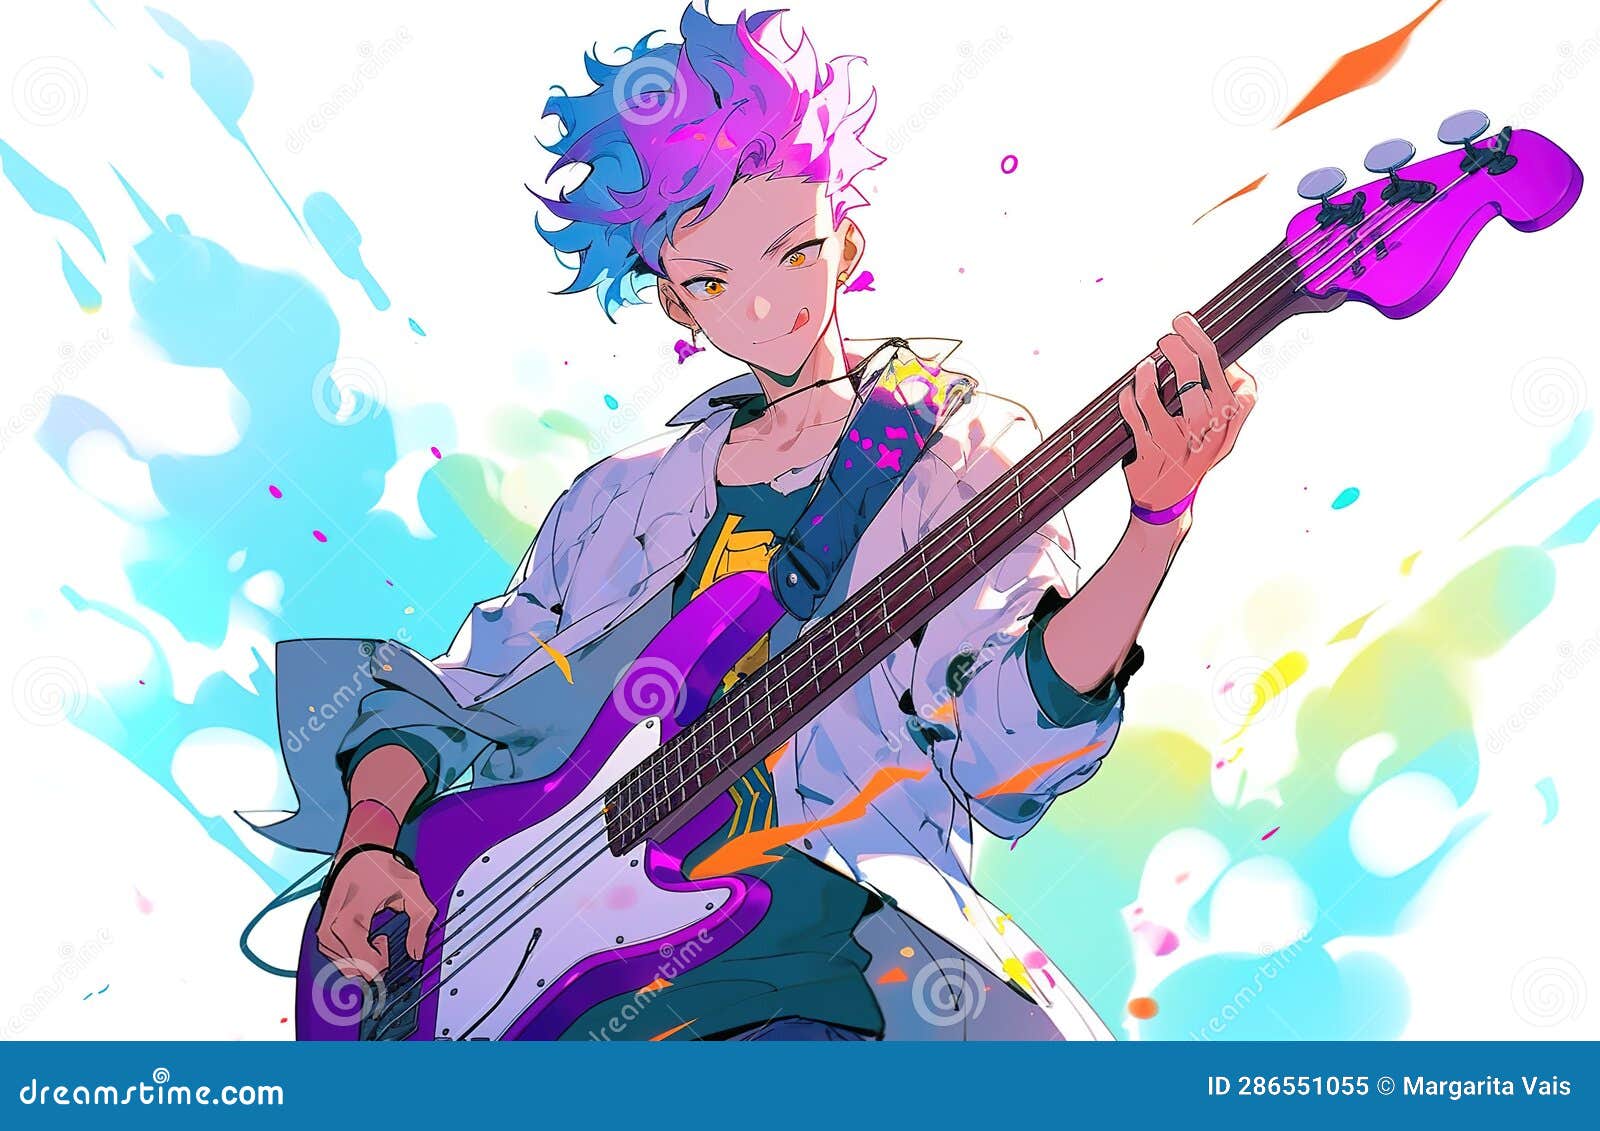 Steam WorkshopBeautiful Anime Girl with a Bass Guitar